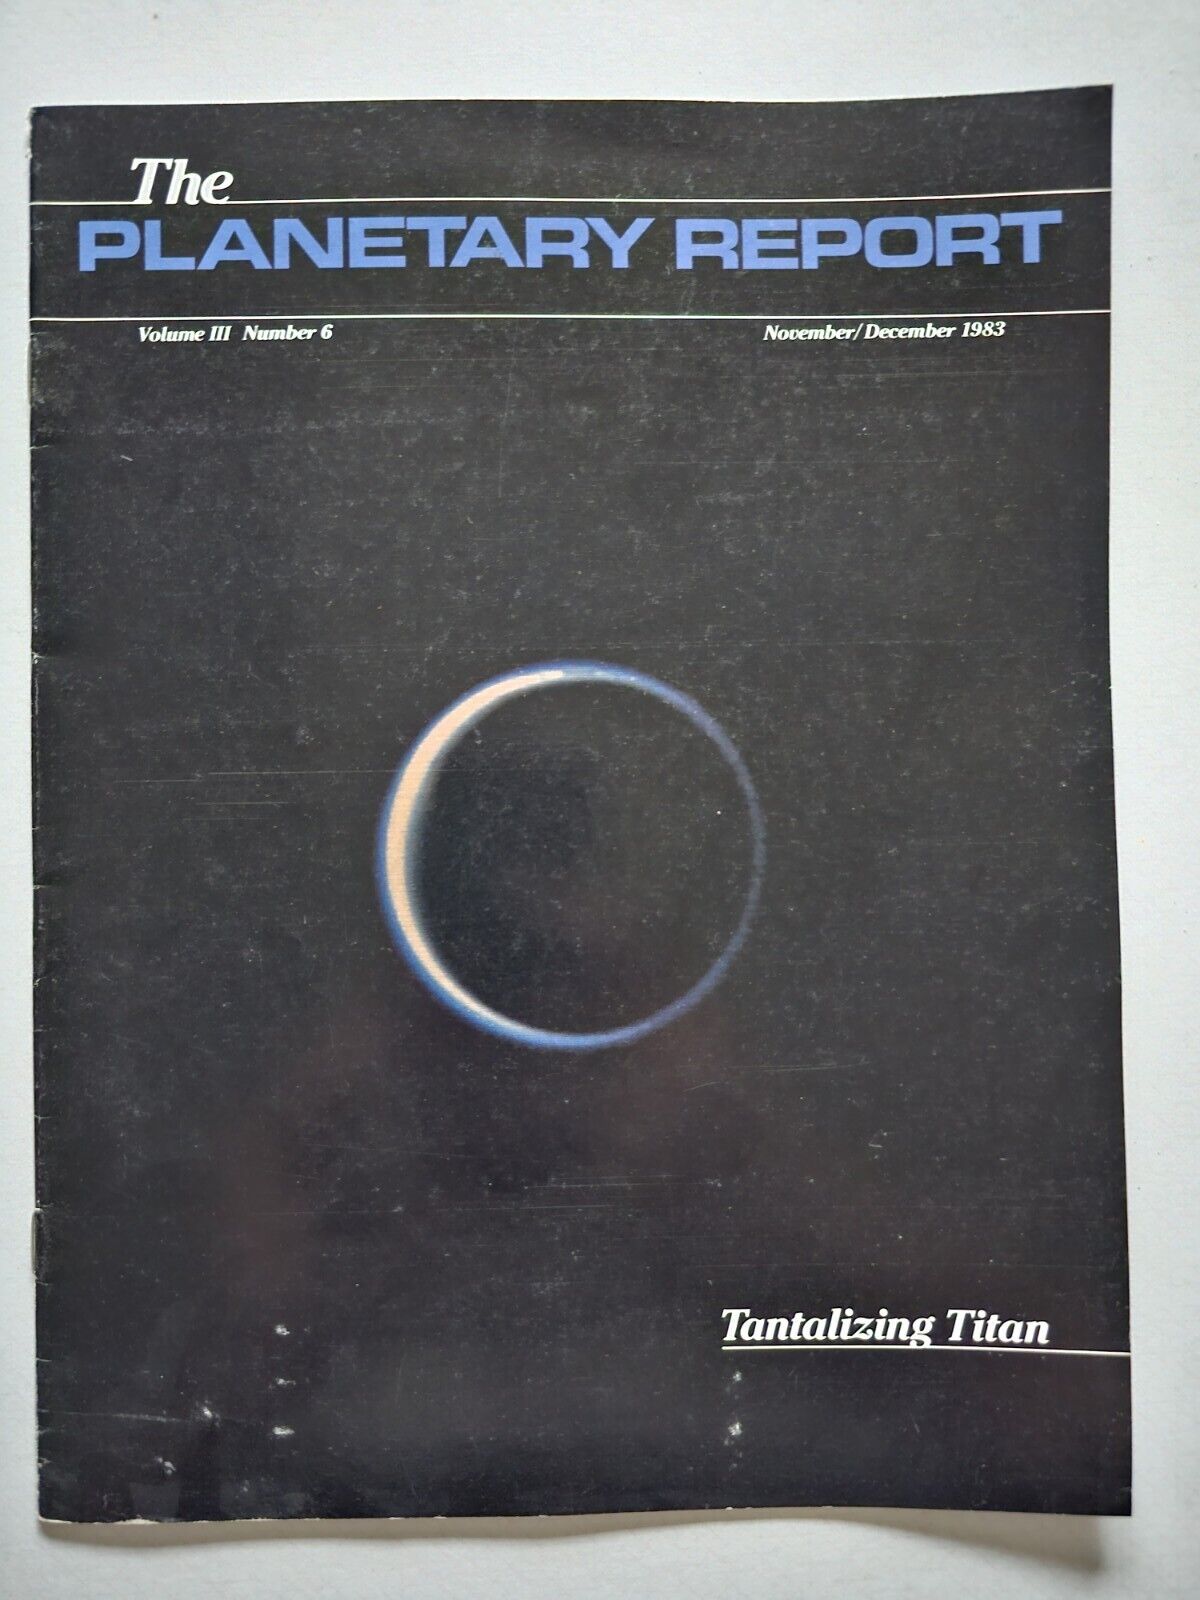 THE PLANETARY REPORT MAGAZINE NOVEMBER/DECEMBER 1983 Vol 3 No. 6